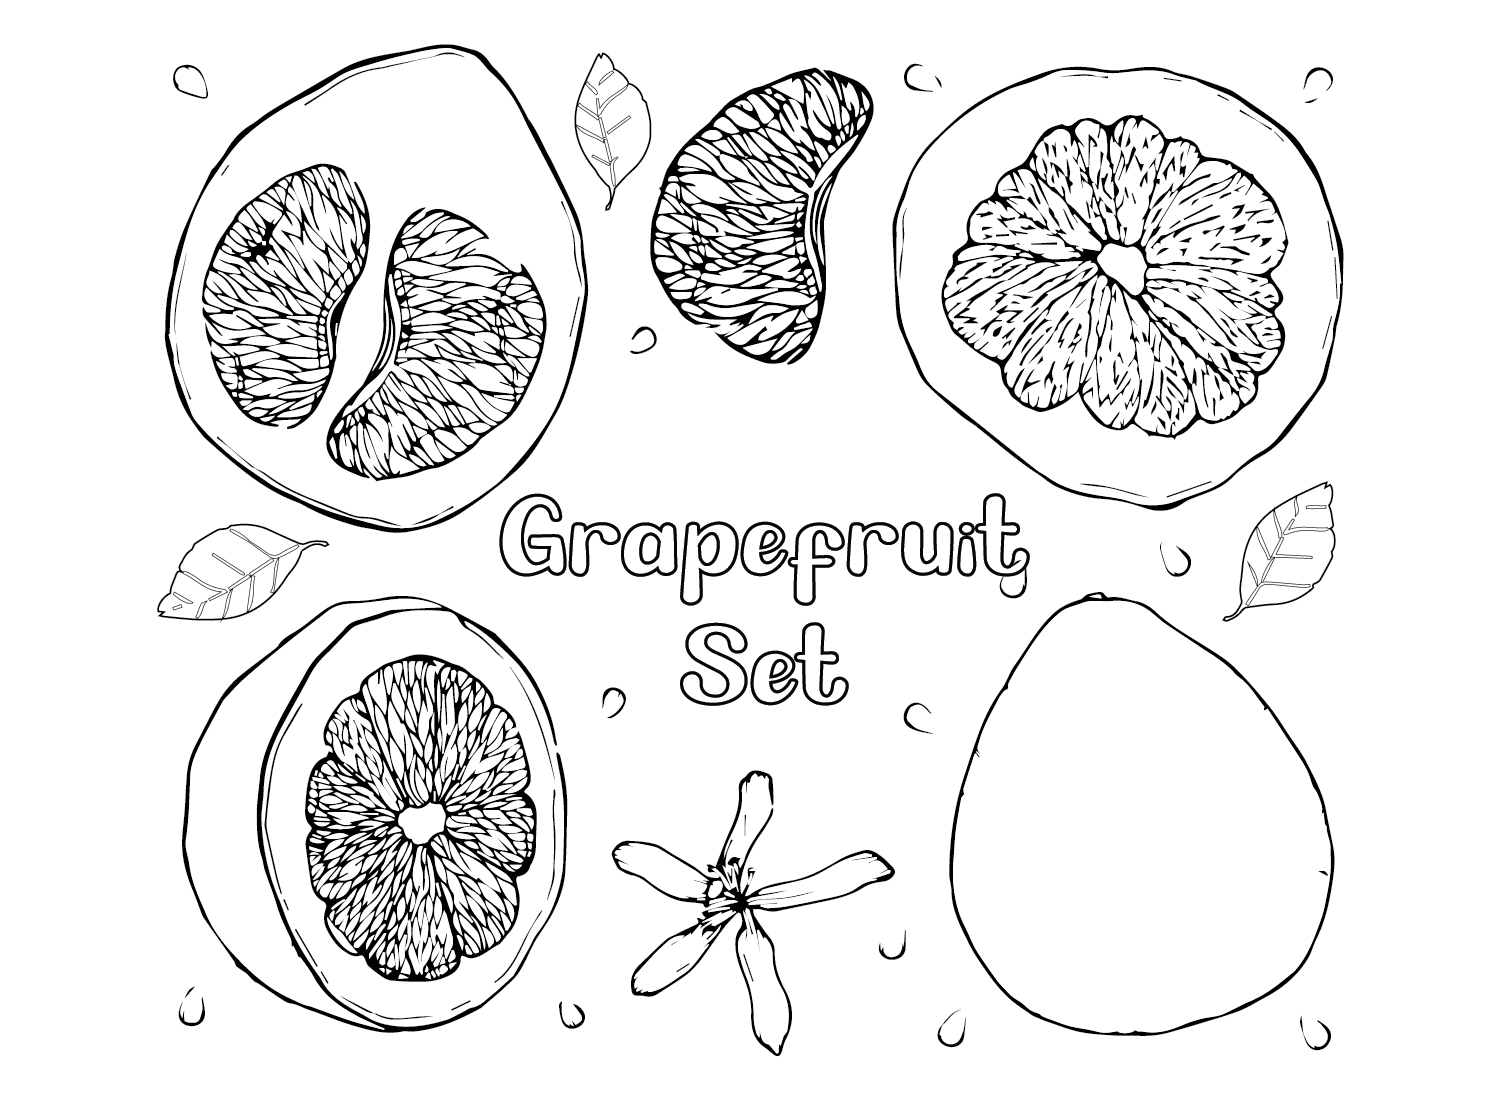 Grapefruit Set Coloring Page